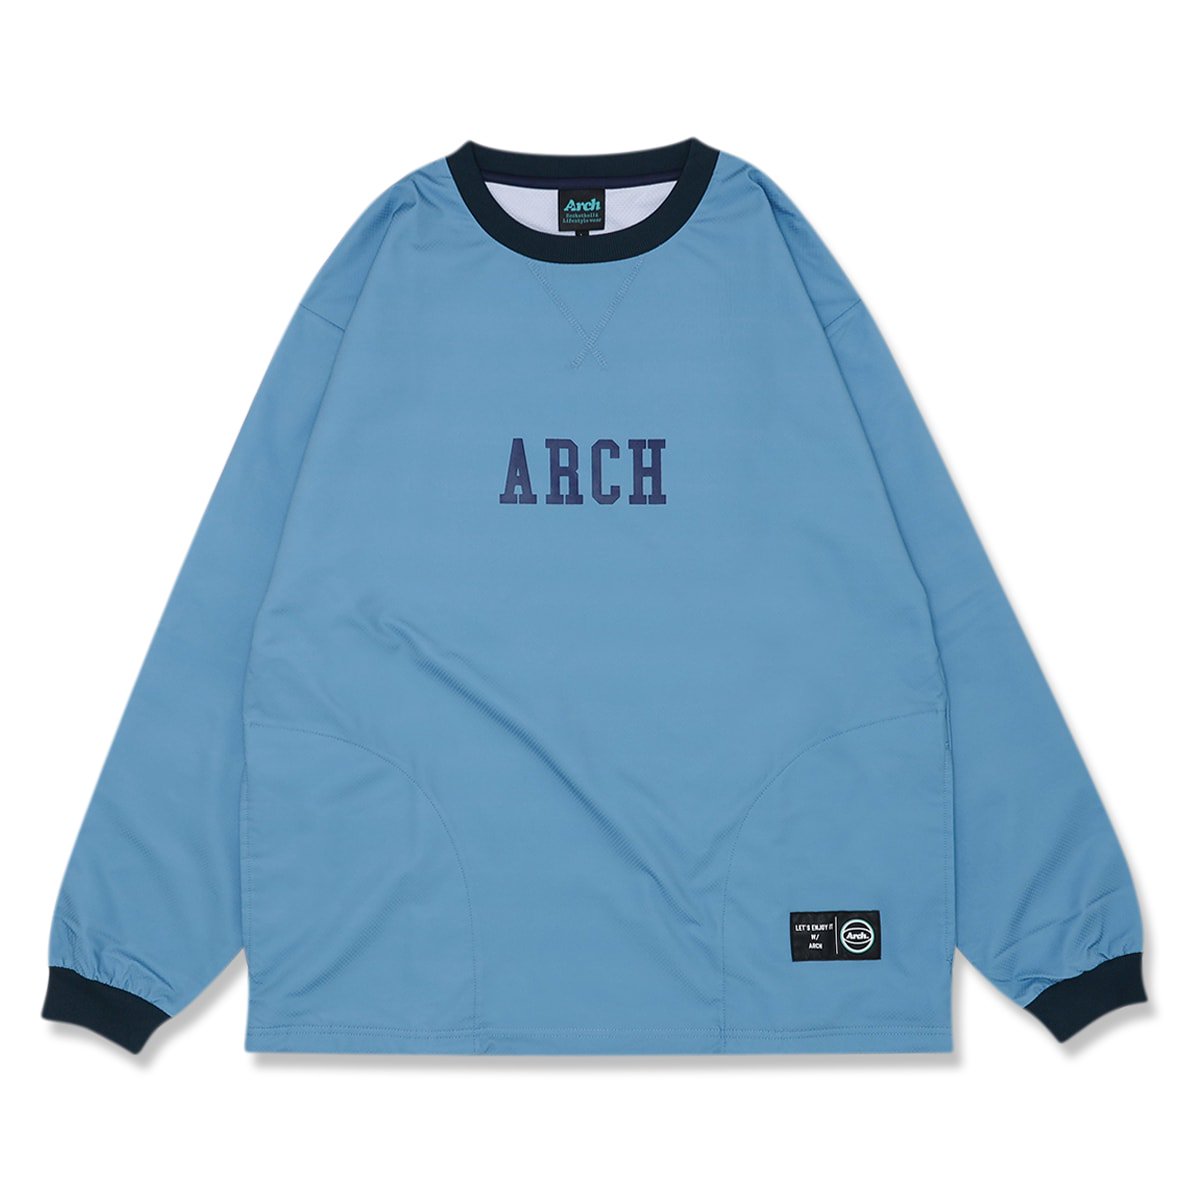 standard wind crewneck shirt【slate blue】 - Arch ☆ アーチ 